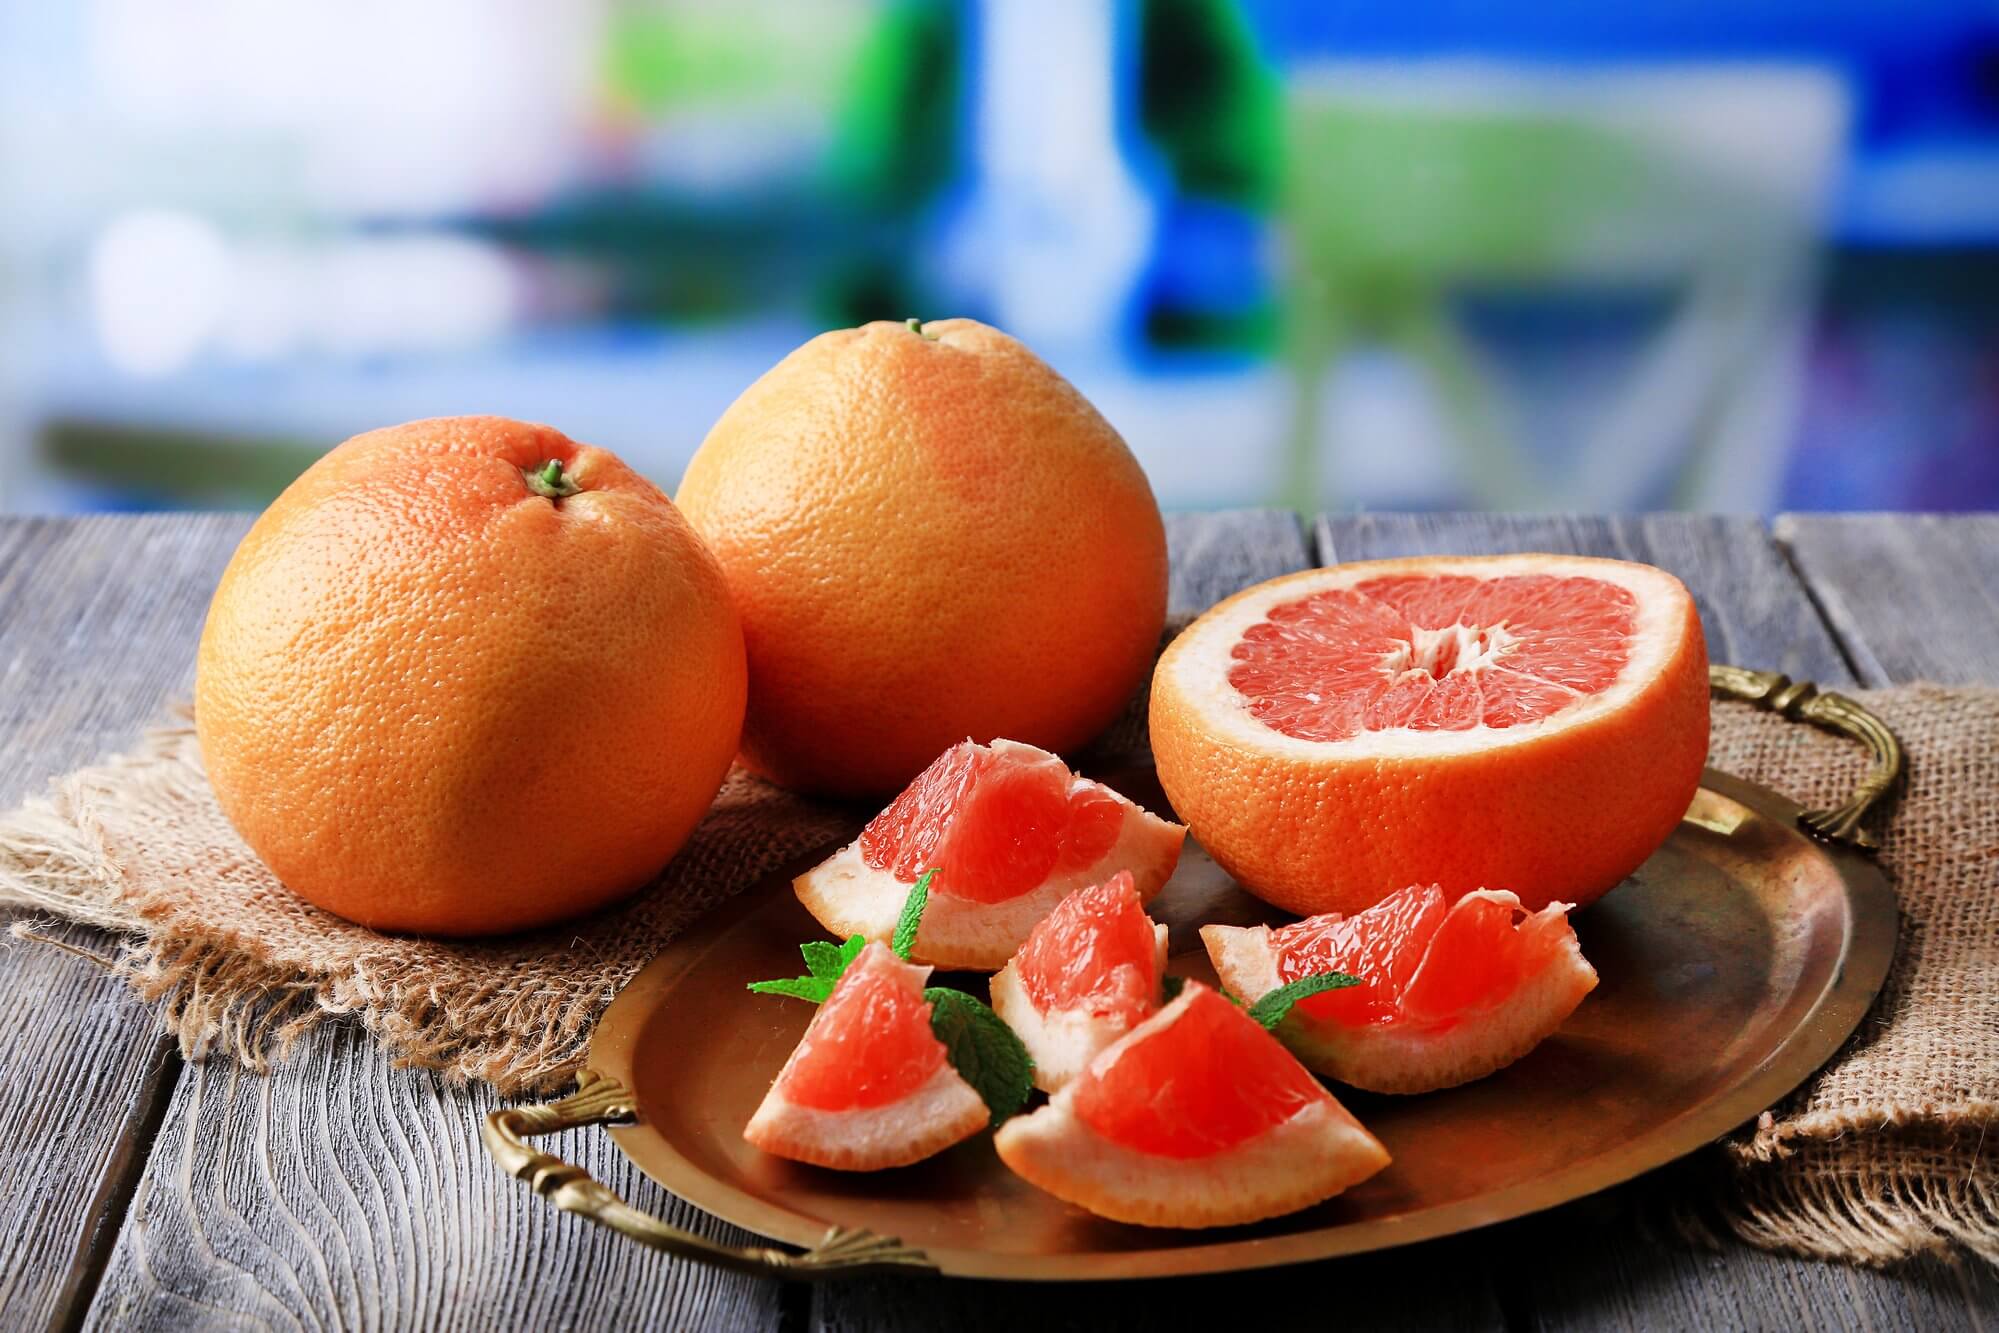 Is Grapefruit Keto? How to Consume Grapefruit on Keto